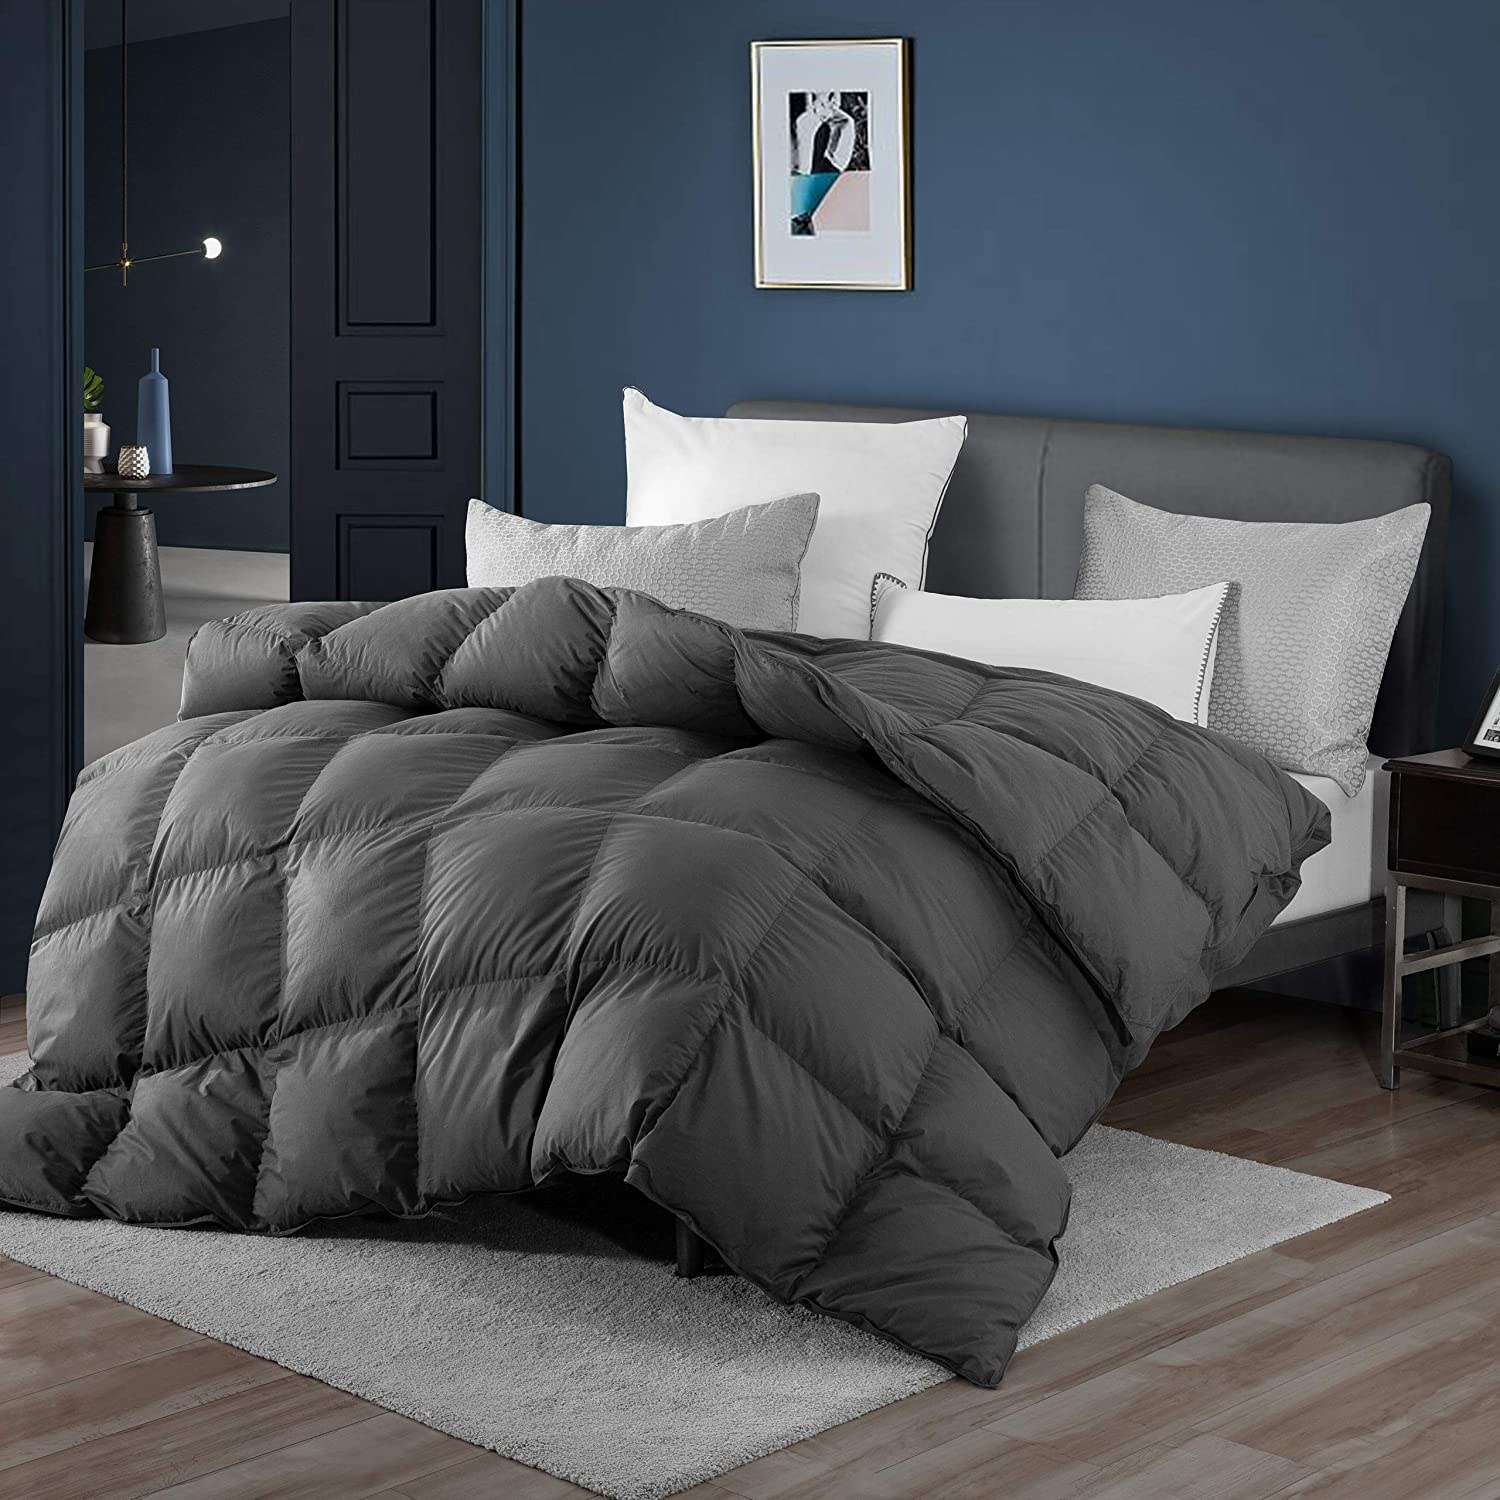 Gray duvet spread over bed